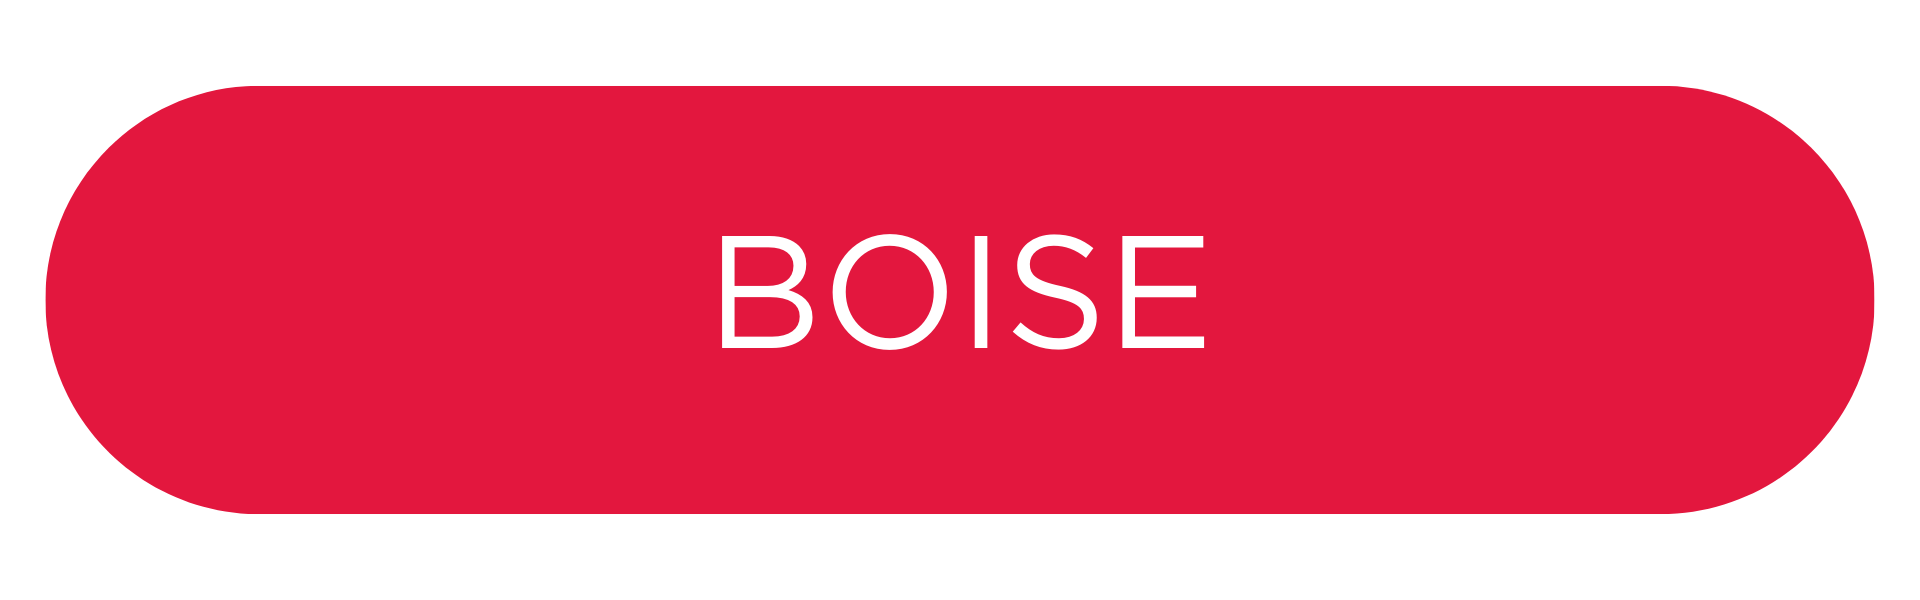 Boise office icon